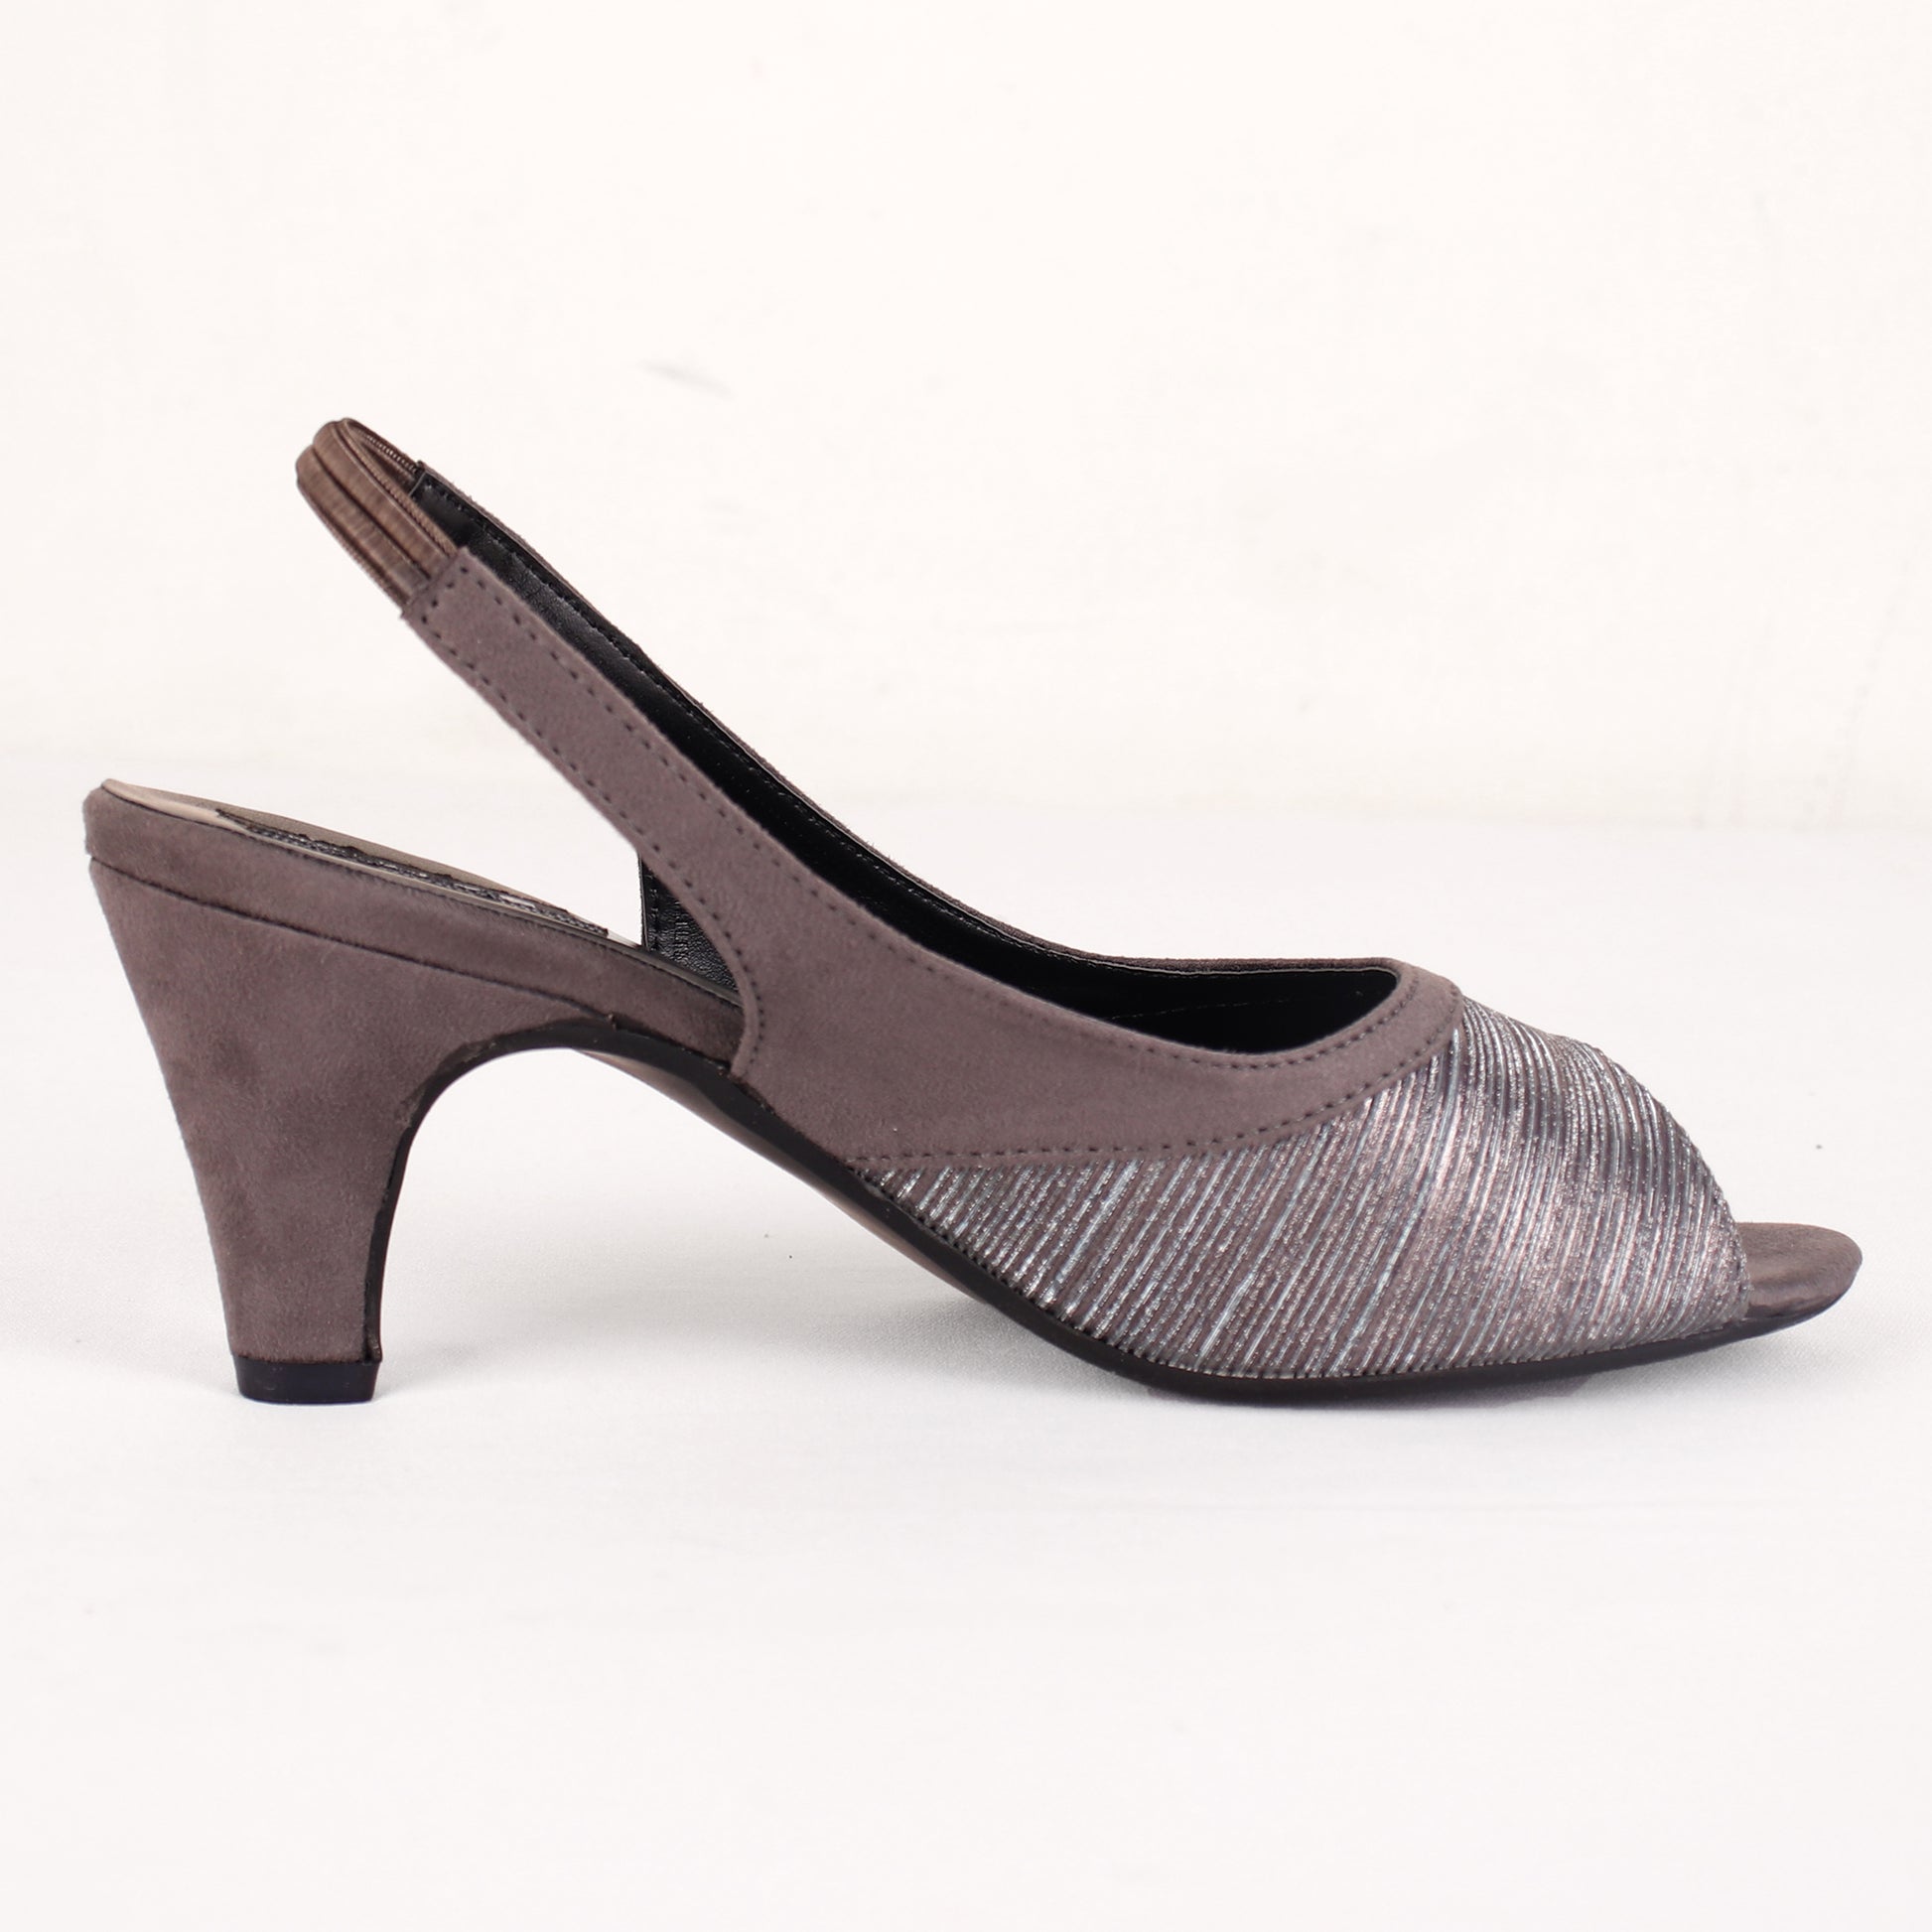 Foot Wear,The Artistic Scrub Heel in Grey - Cippele Multi Store